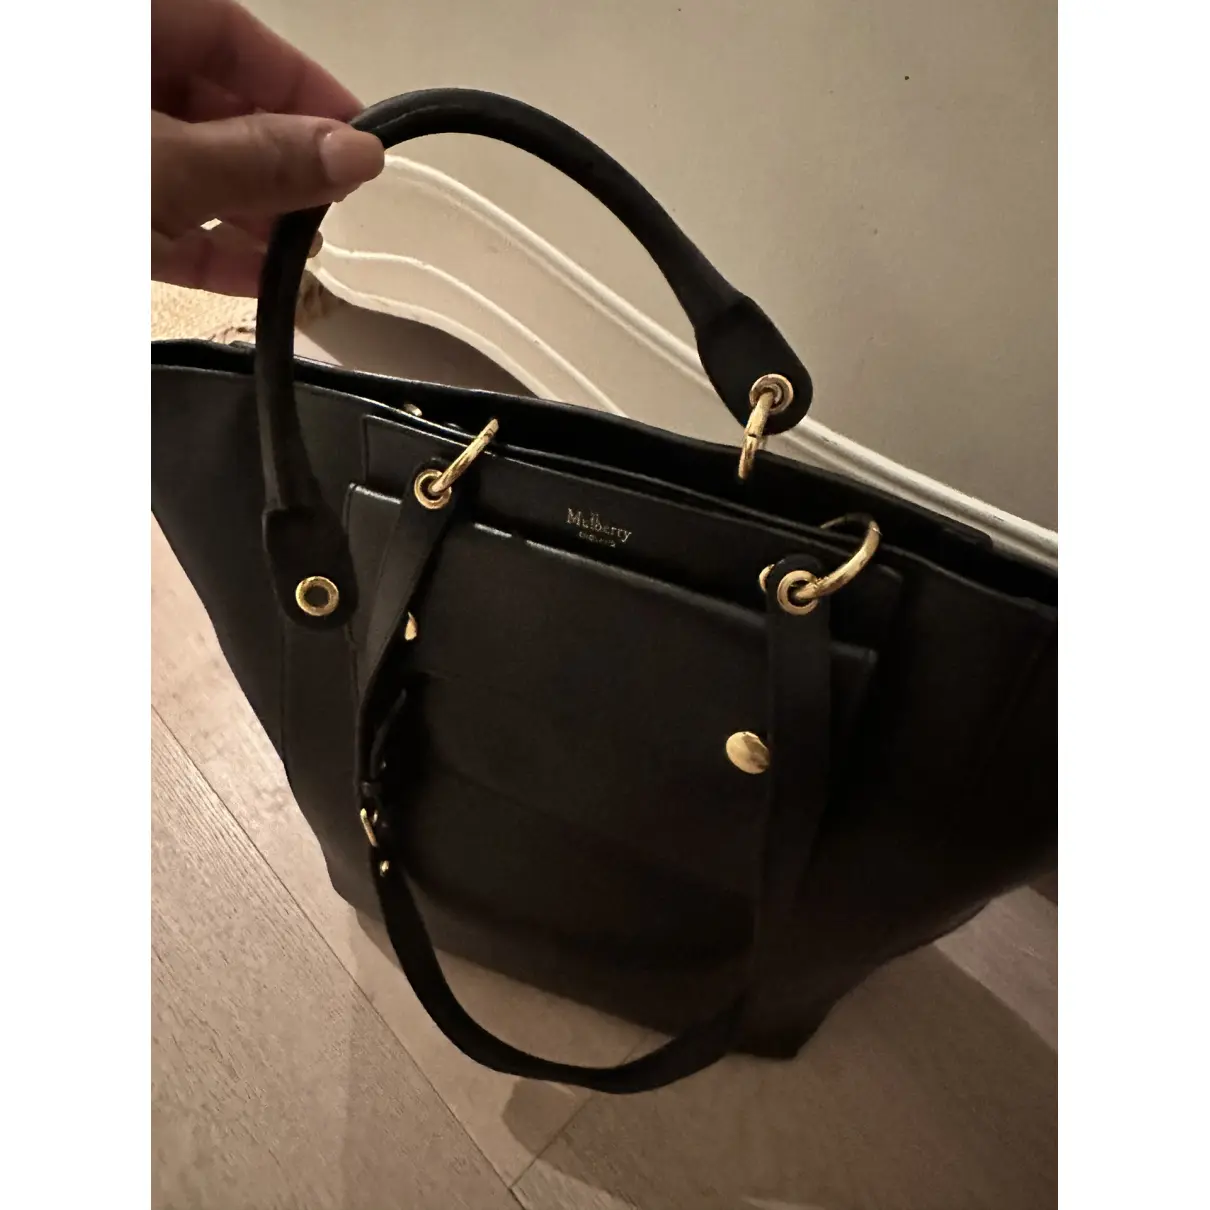 Arundel leather handbag Mulberry